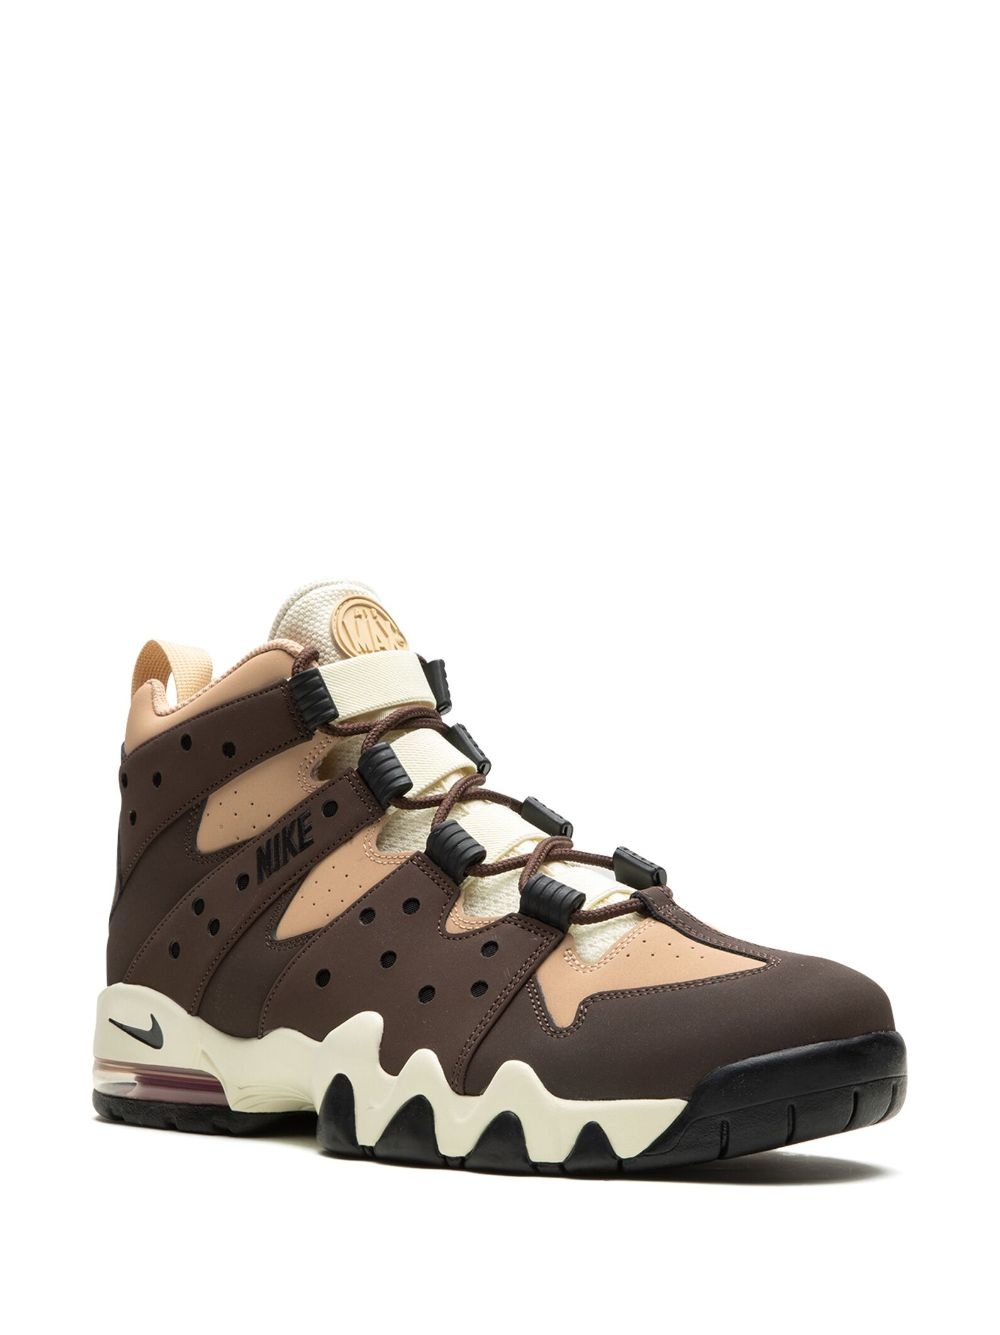 Air Max2 CB 94 "Baroque Brown" sneakers - 2